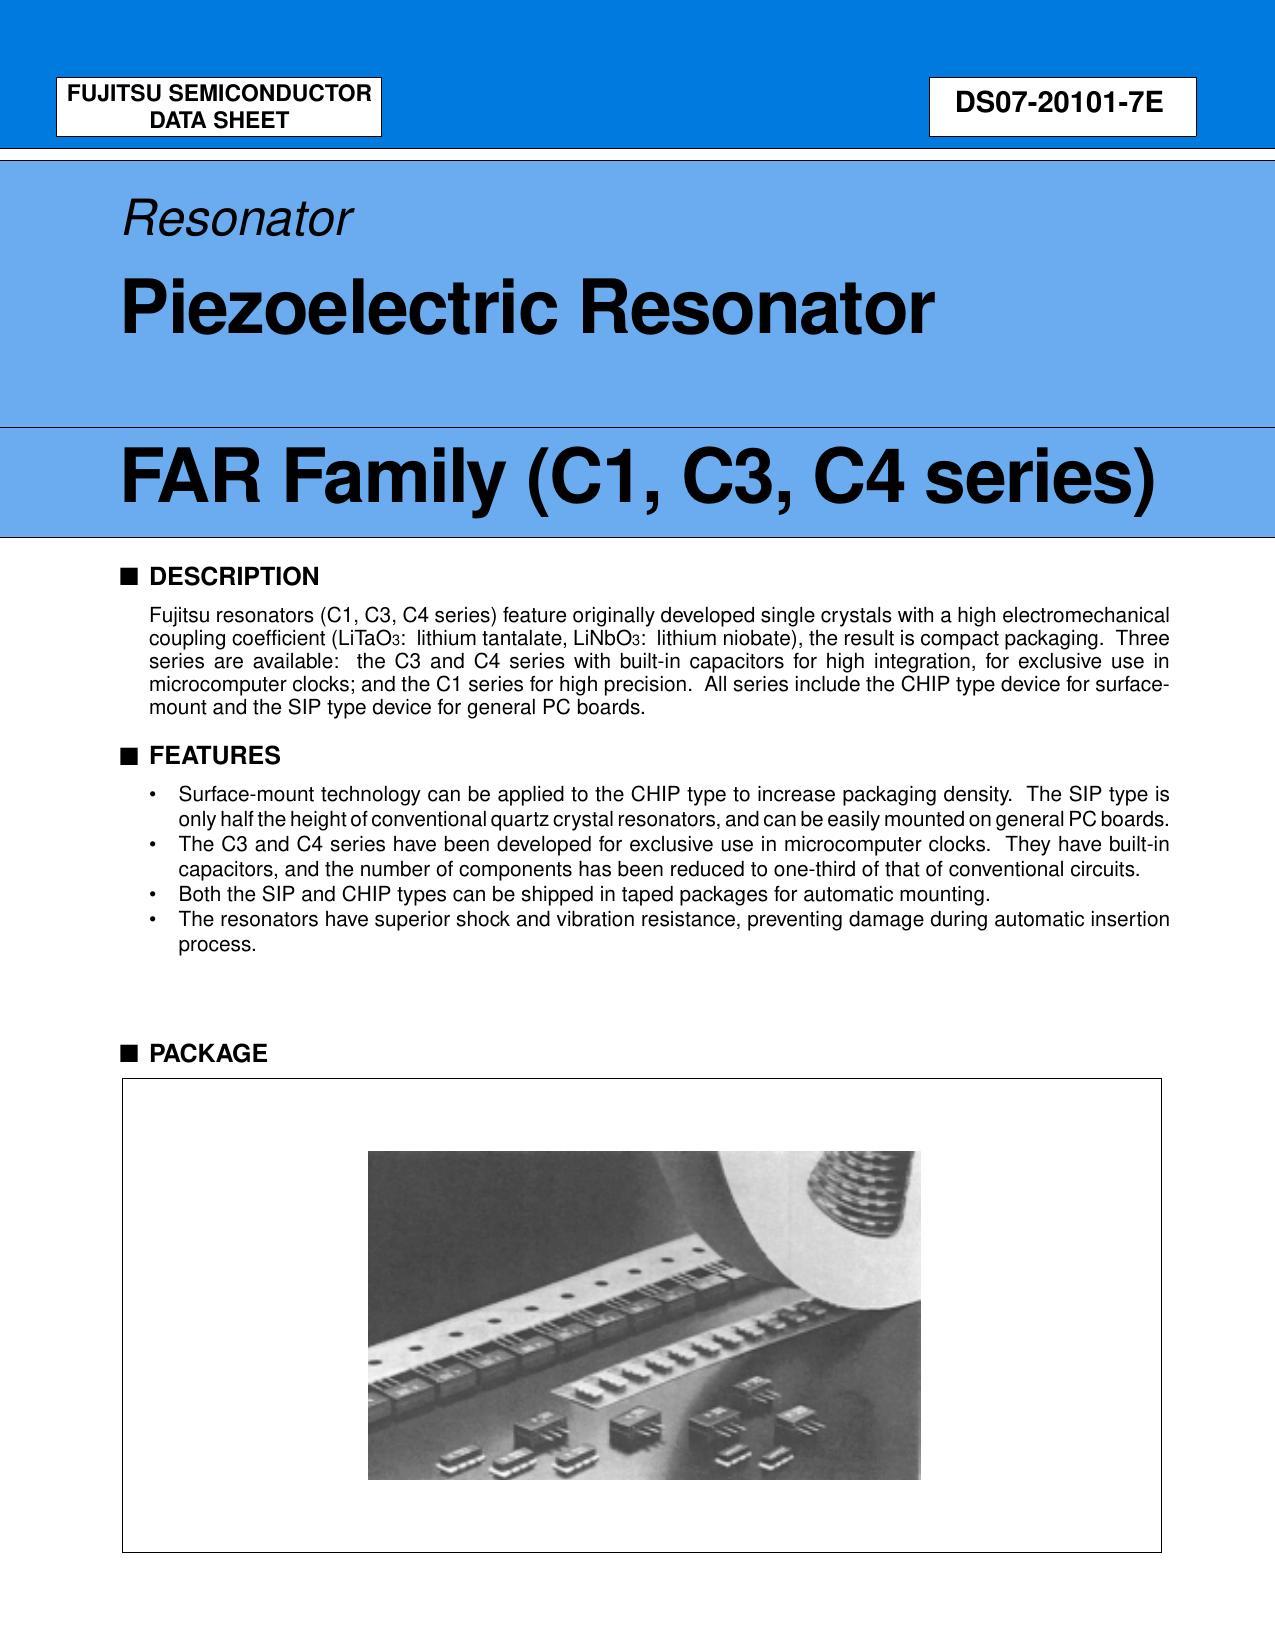 fujitsu-semiconductor-data-sheet---resonator-piezoelectric-resonator-far-family-c1-c3-c4-series.pdf